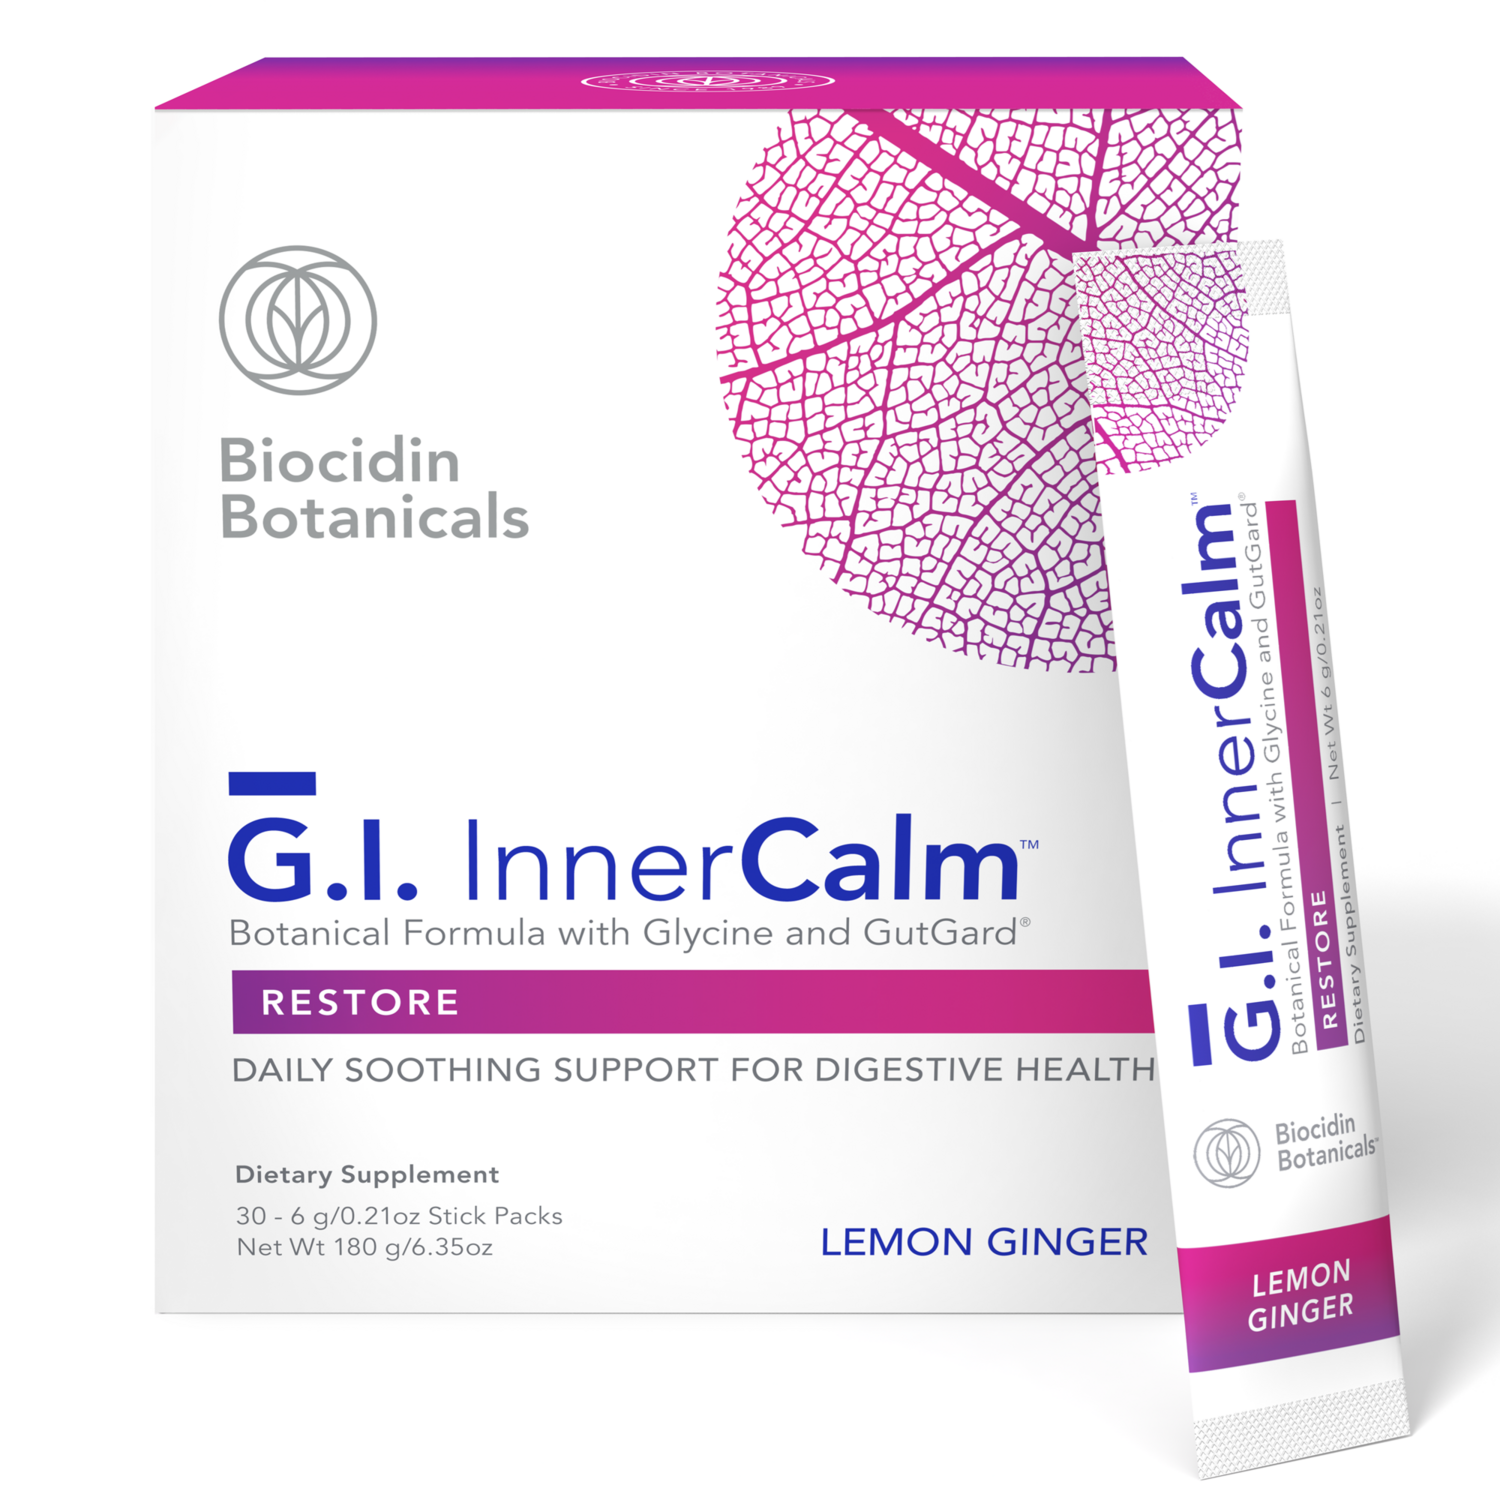 G.I. InnerCalm 30 stick packs Biocidin Botanicals